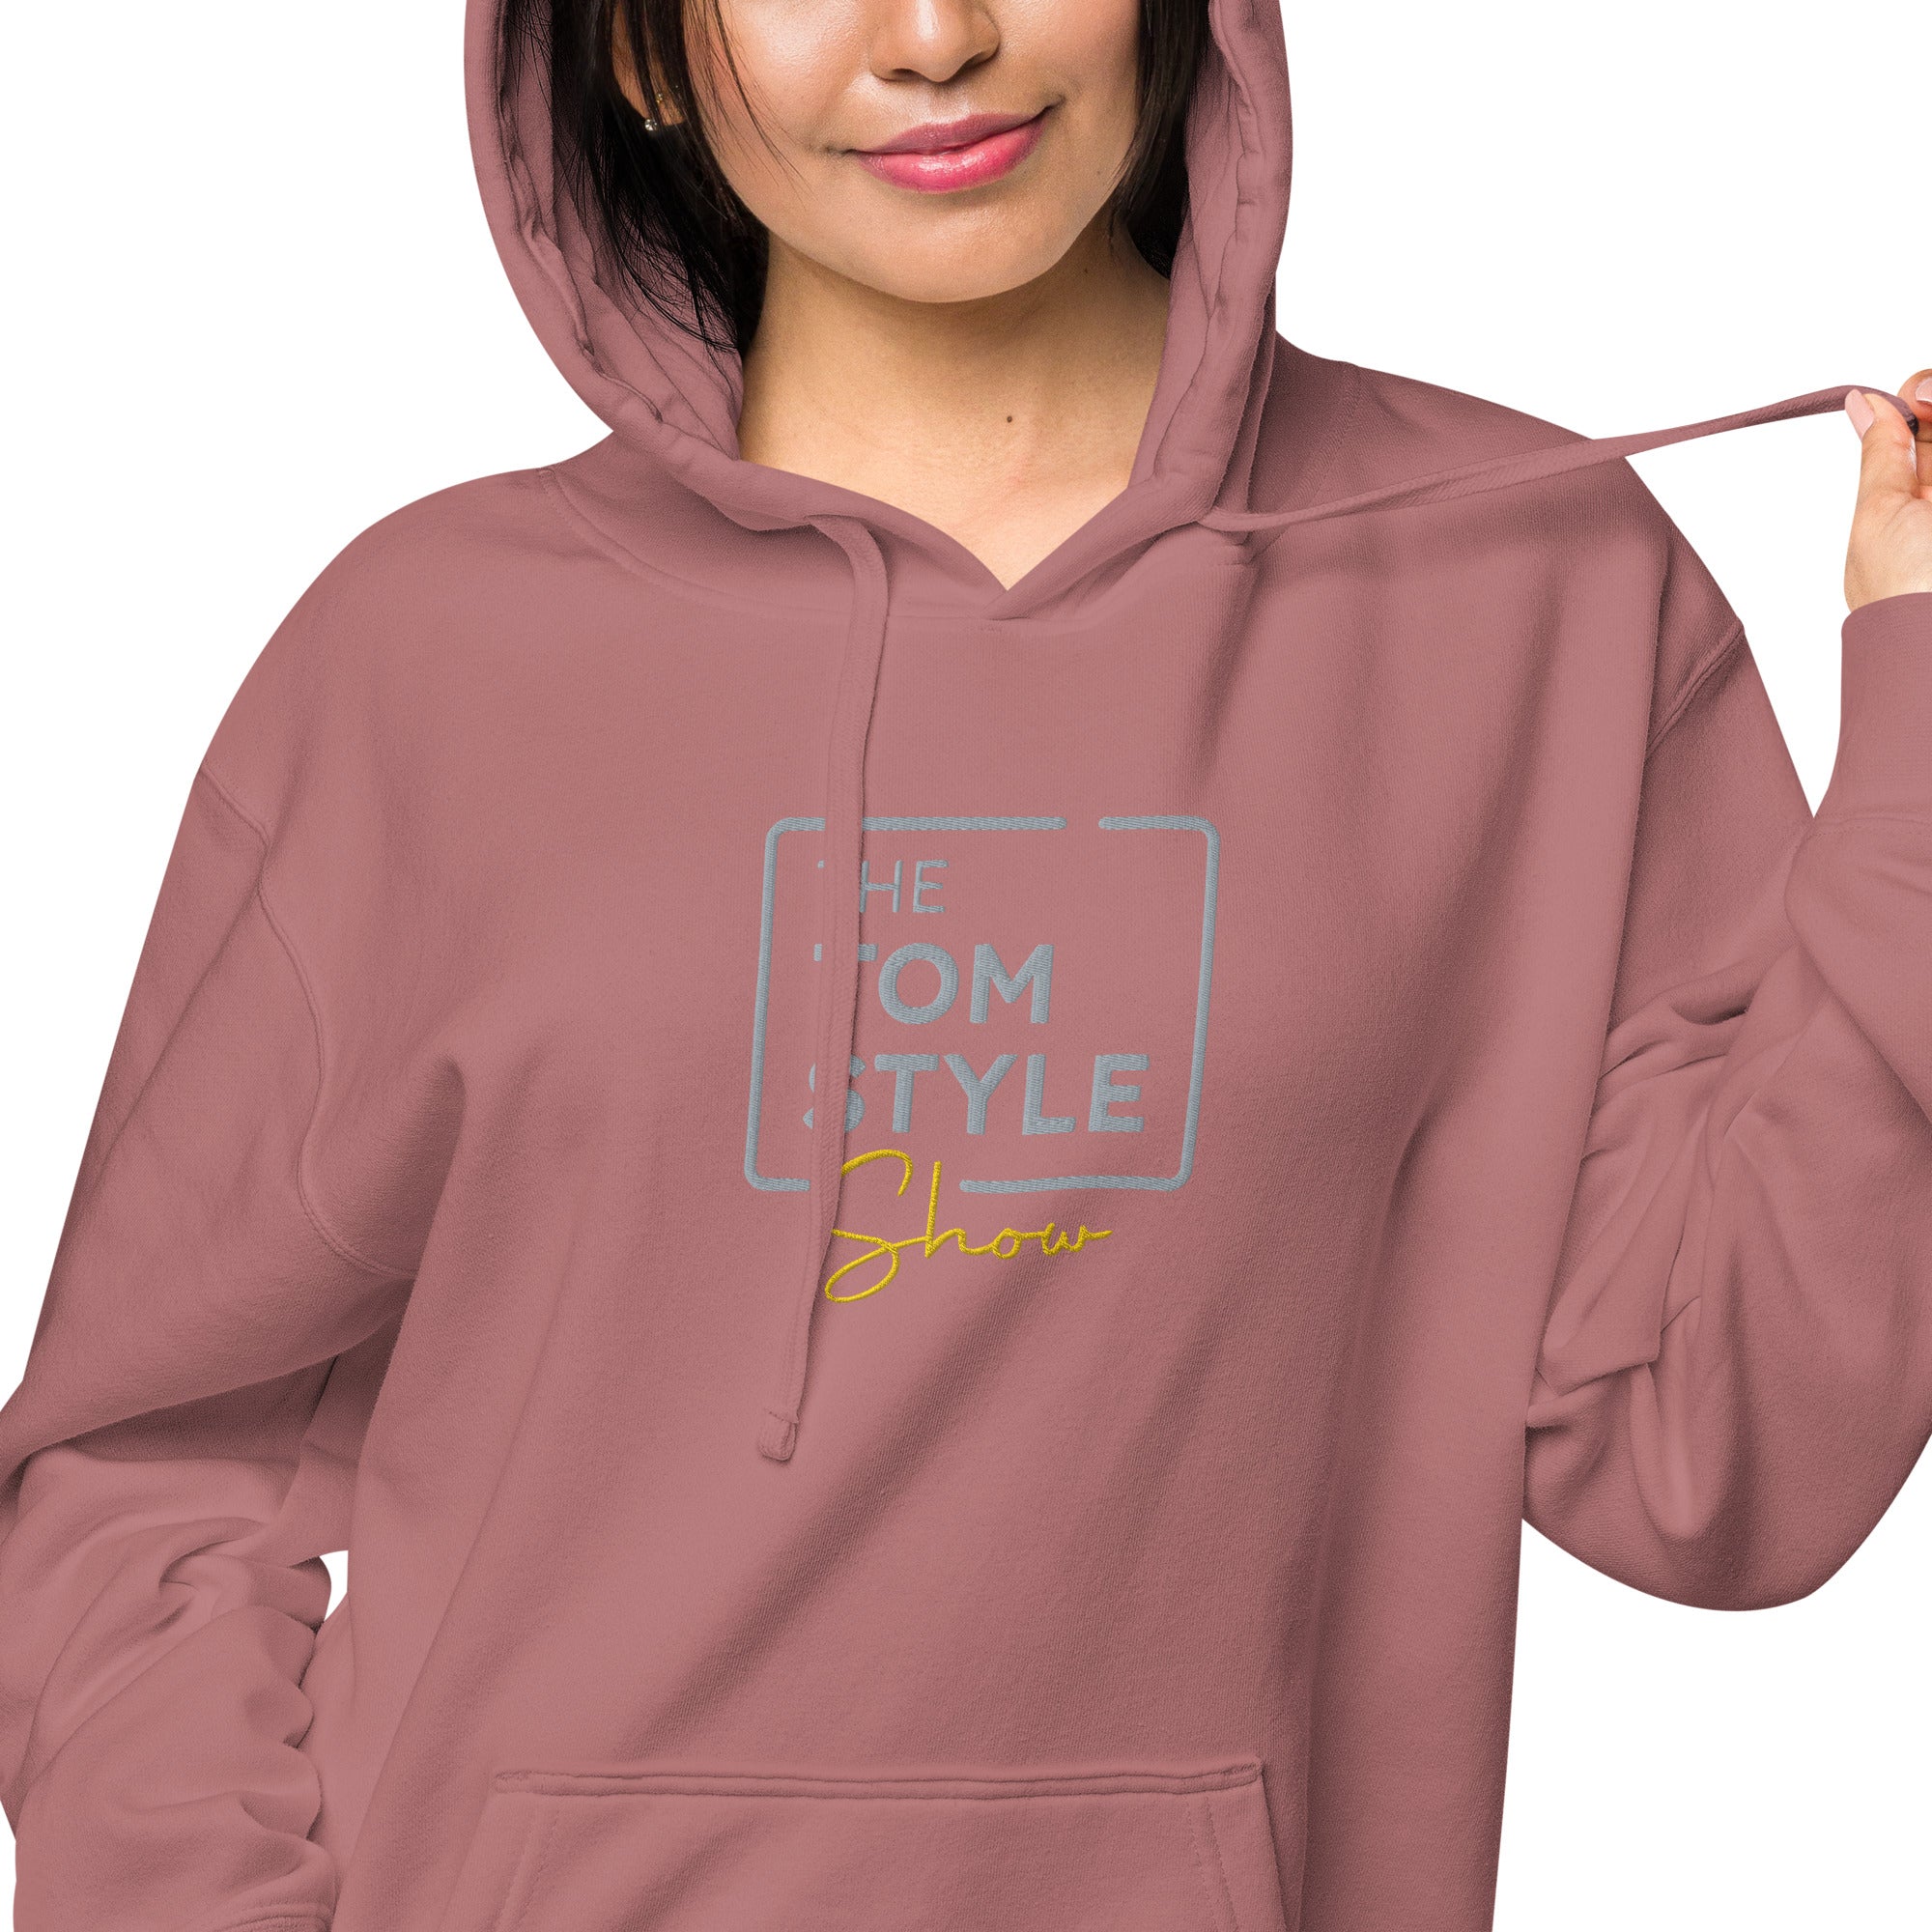 Women's Hoodie - Tom Style Show